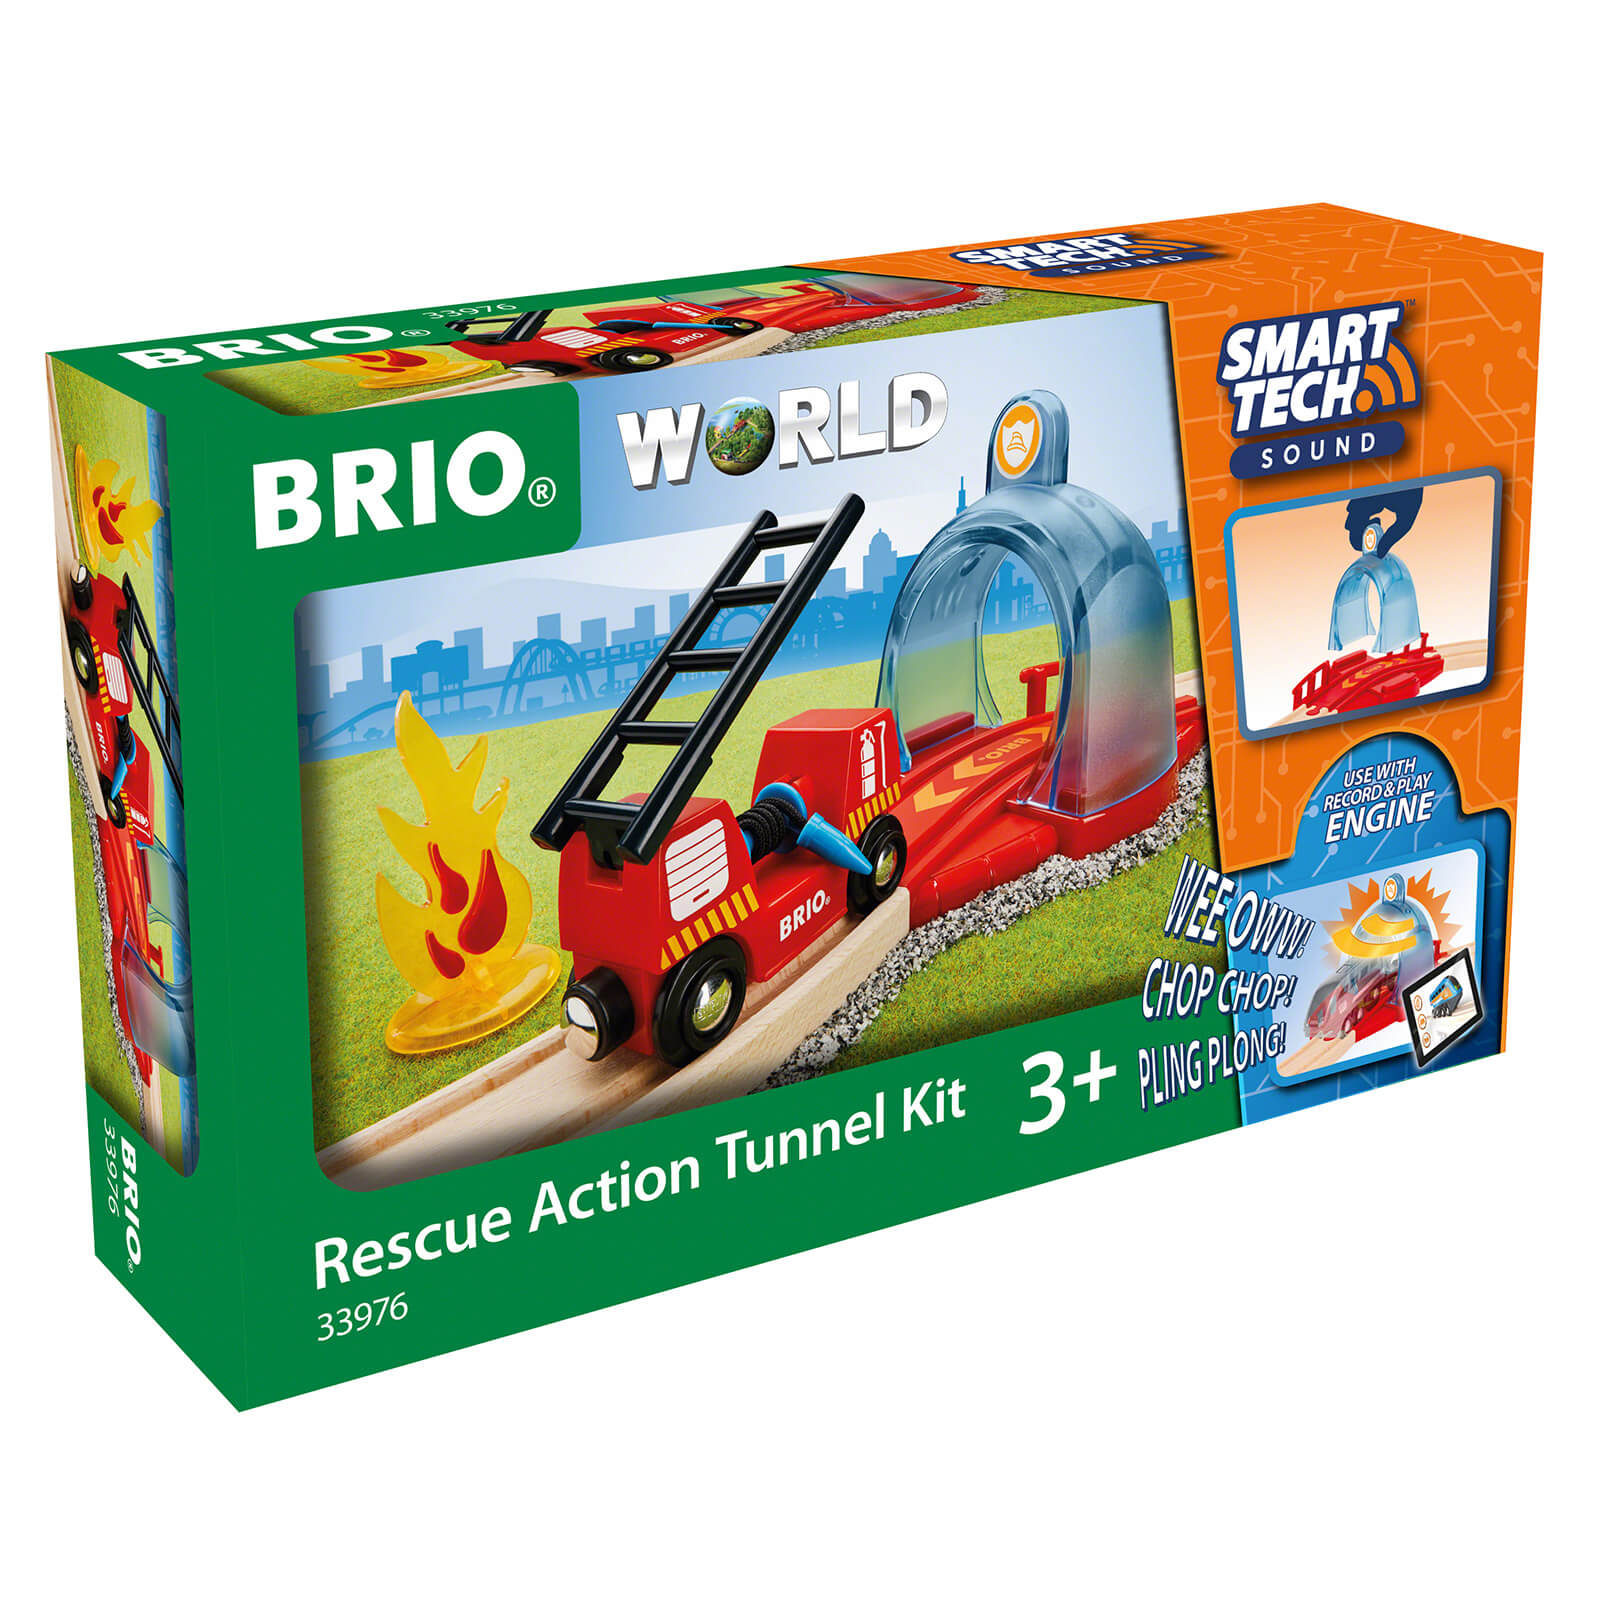 Brio Smart Tech Sound - Rescue Action Tunnel Kit